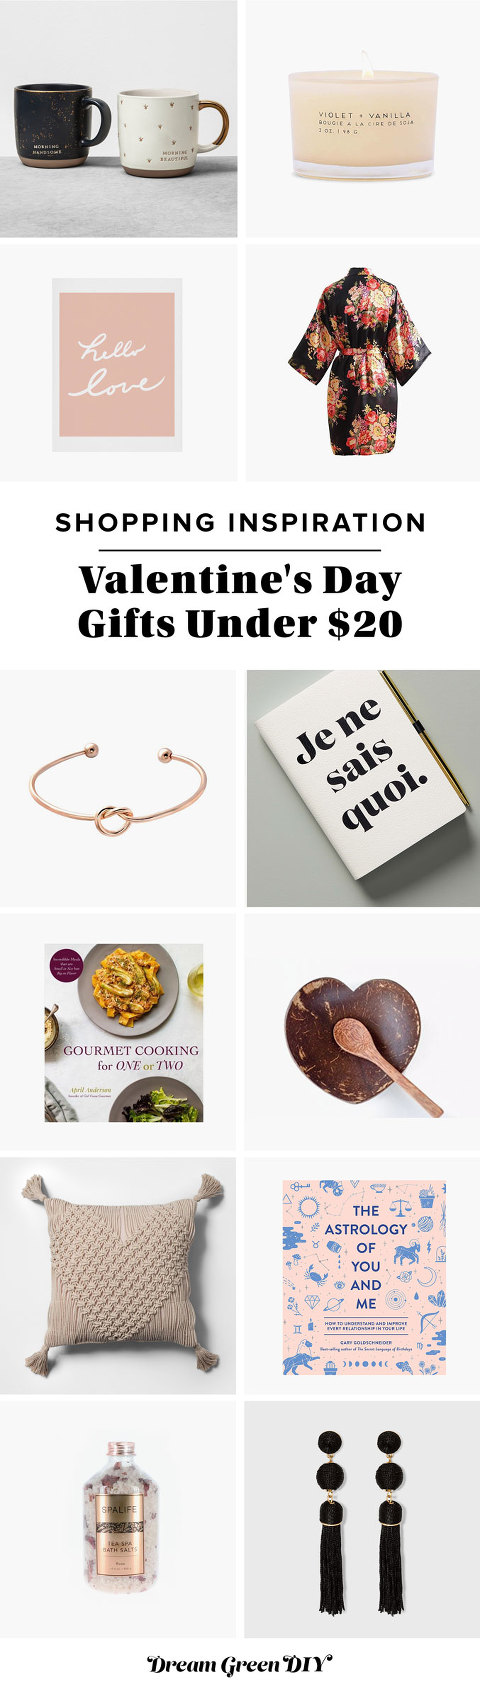 Valentine's Day Gift Guide: Under $20